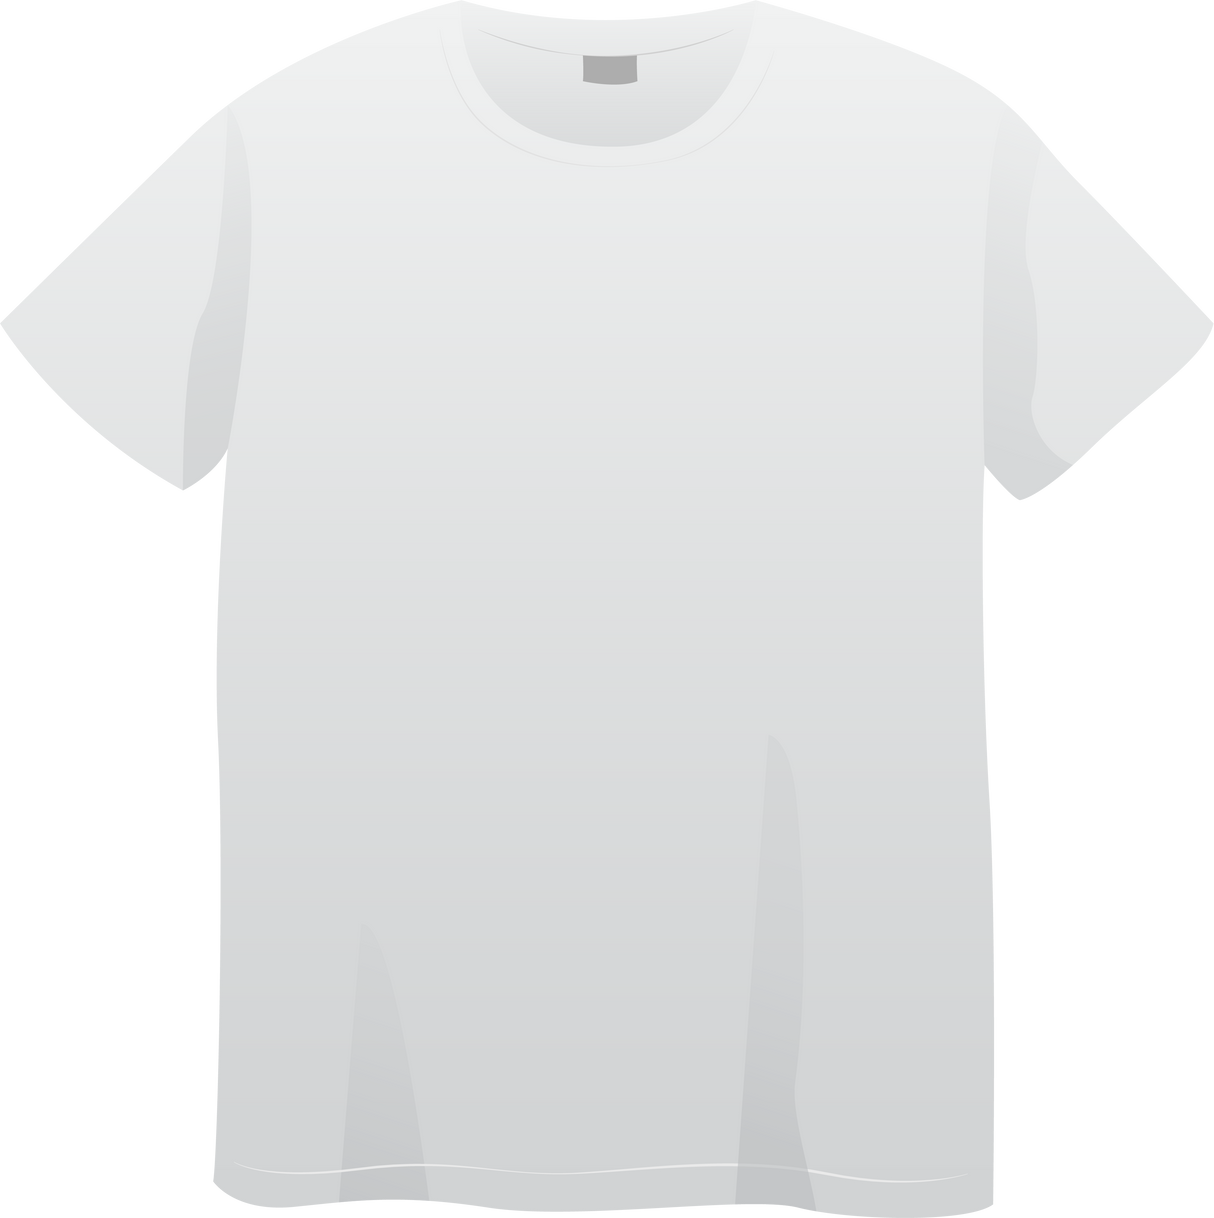 White Plain T-shirt Front Mockup Design